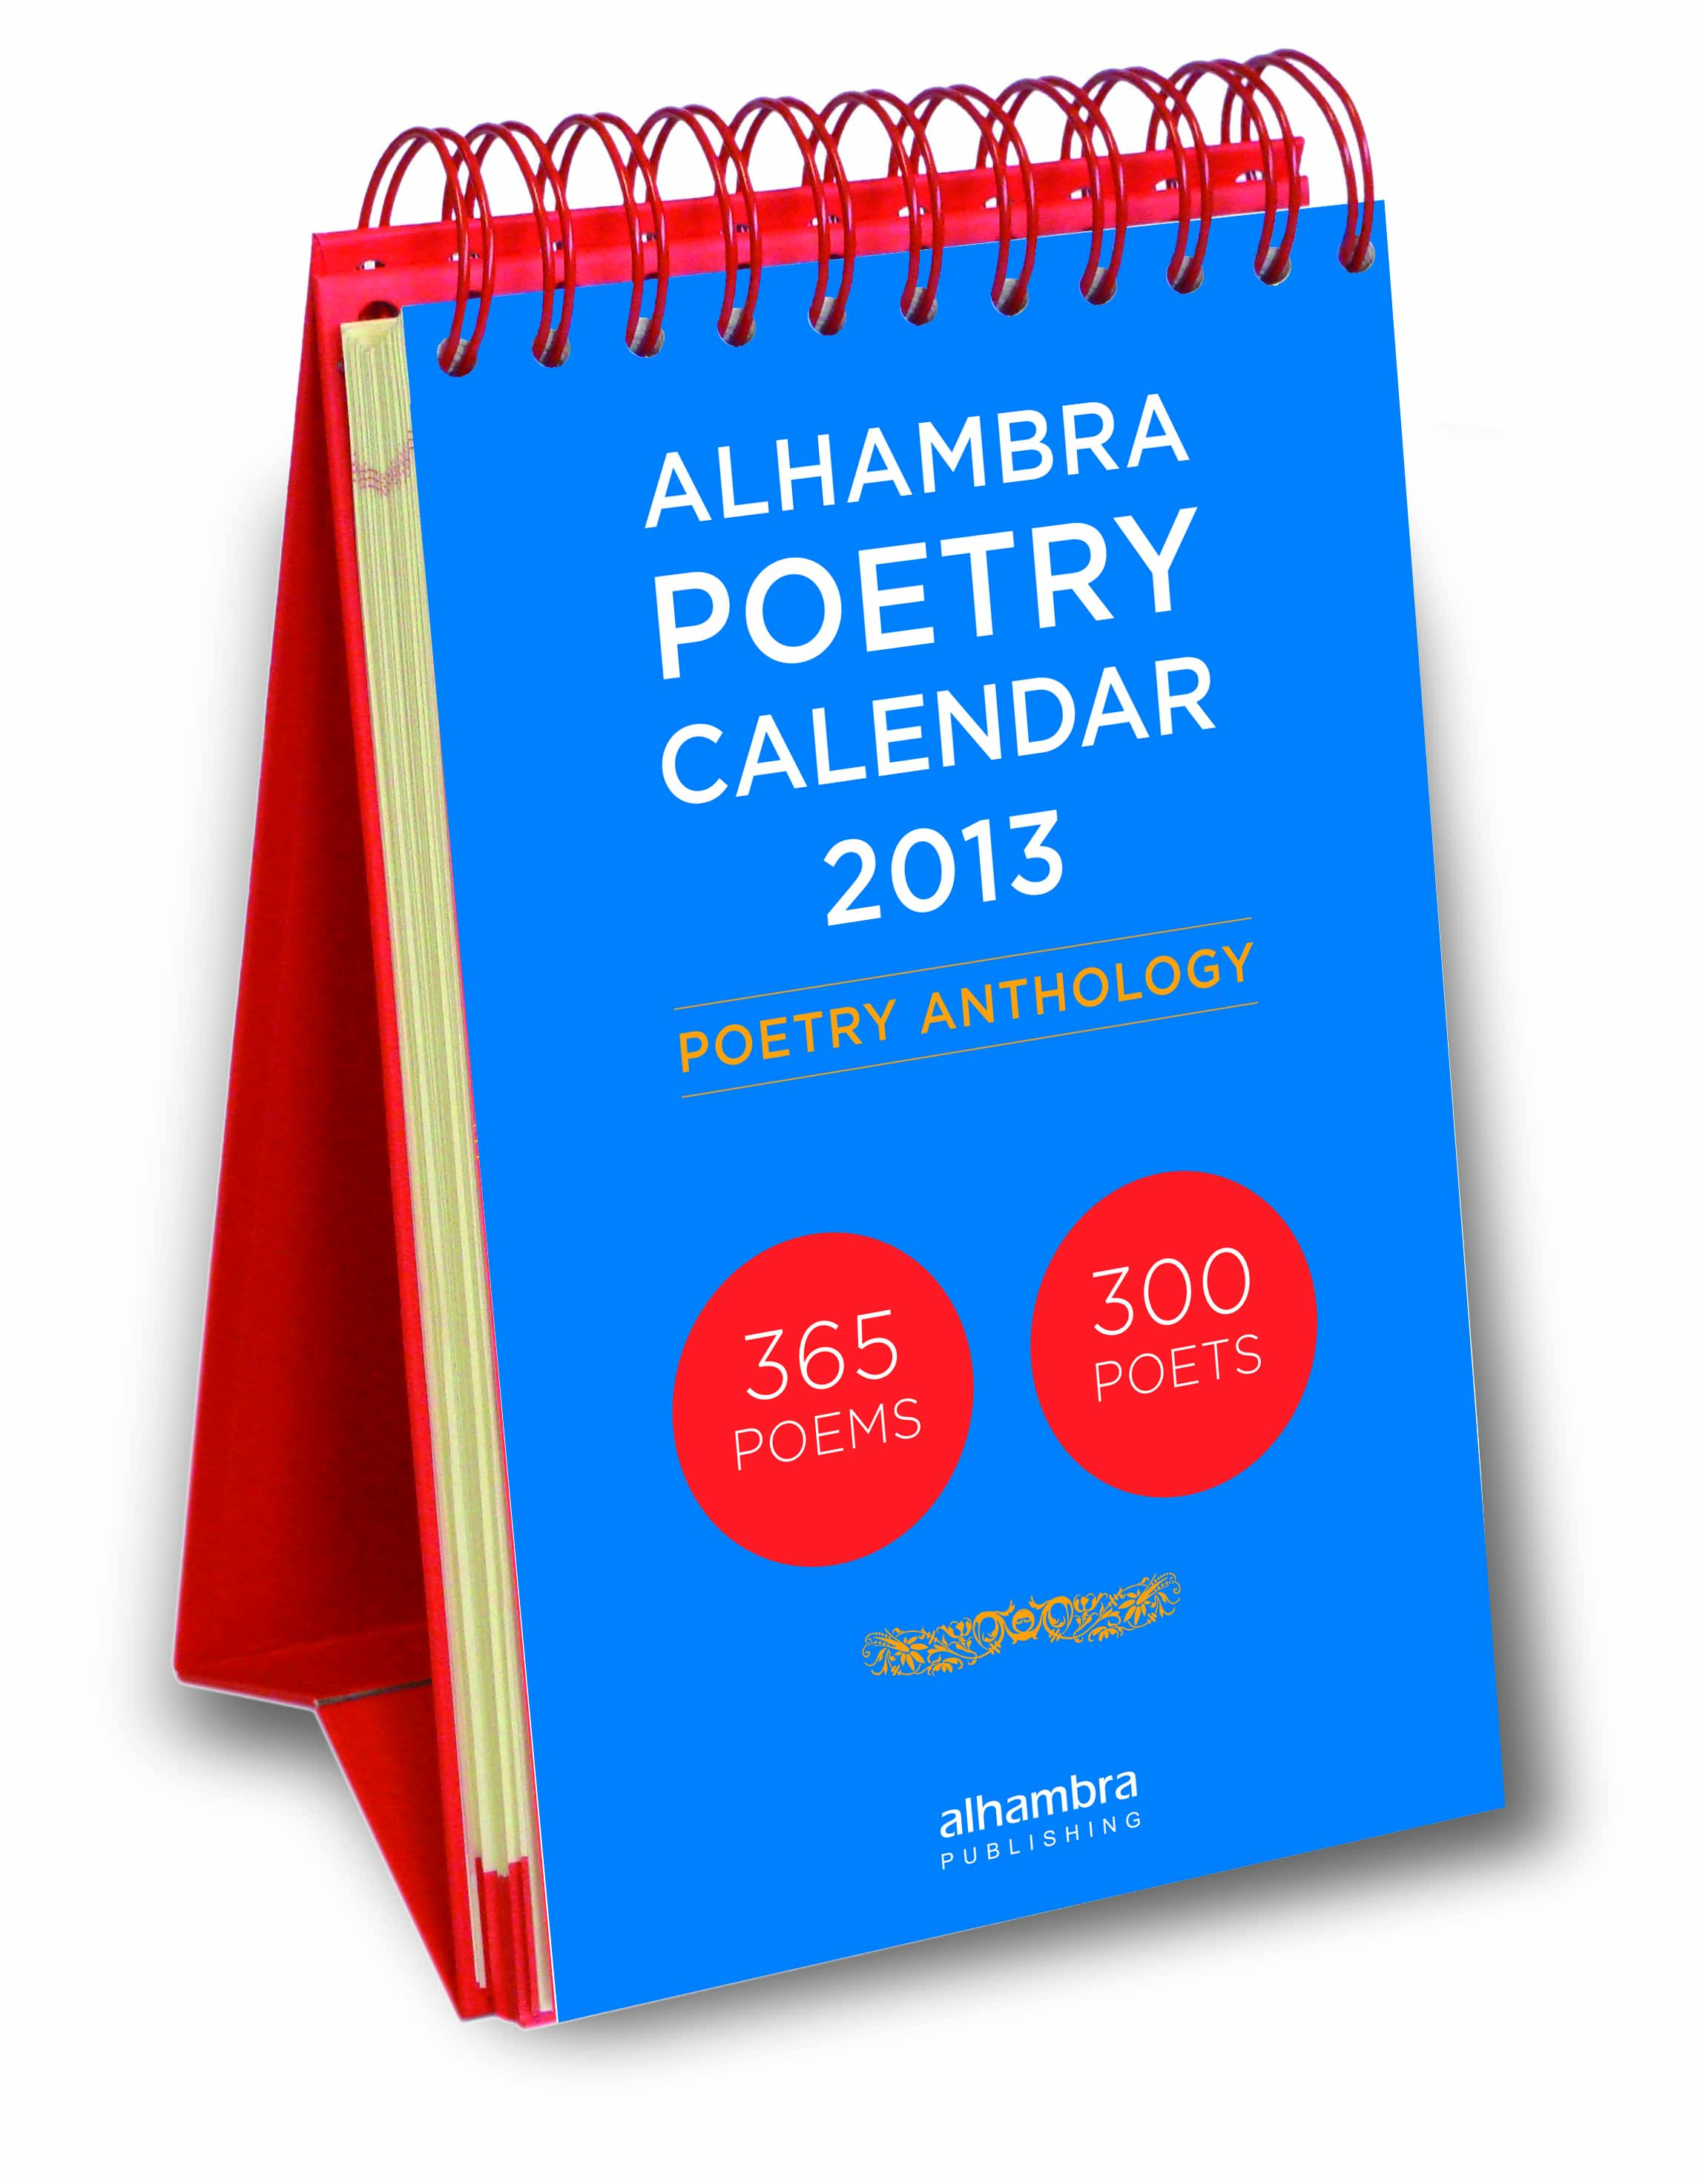 Alhambra Poetry Calendar 2013.